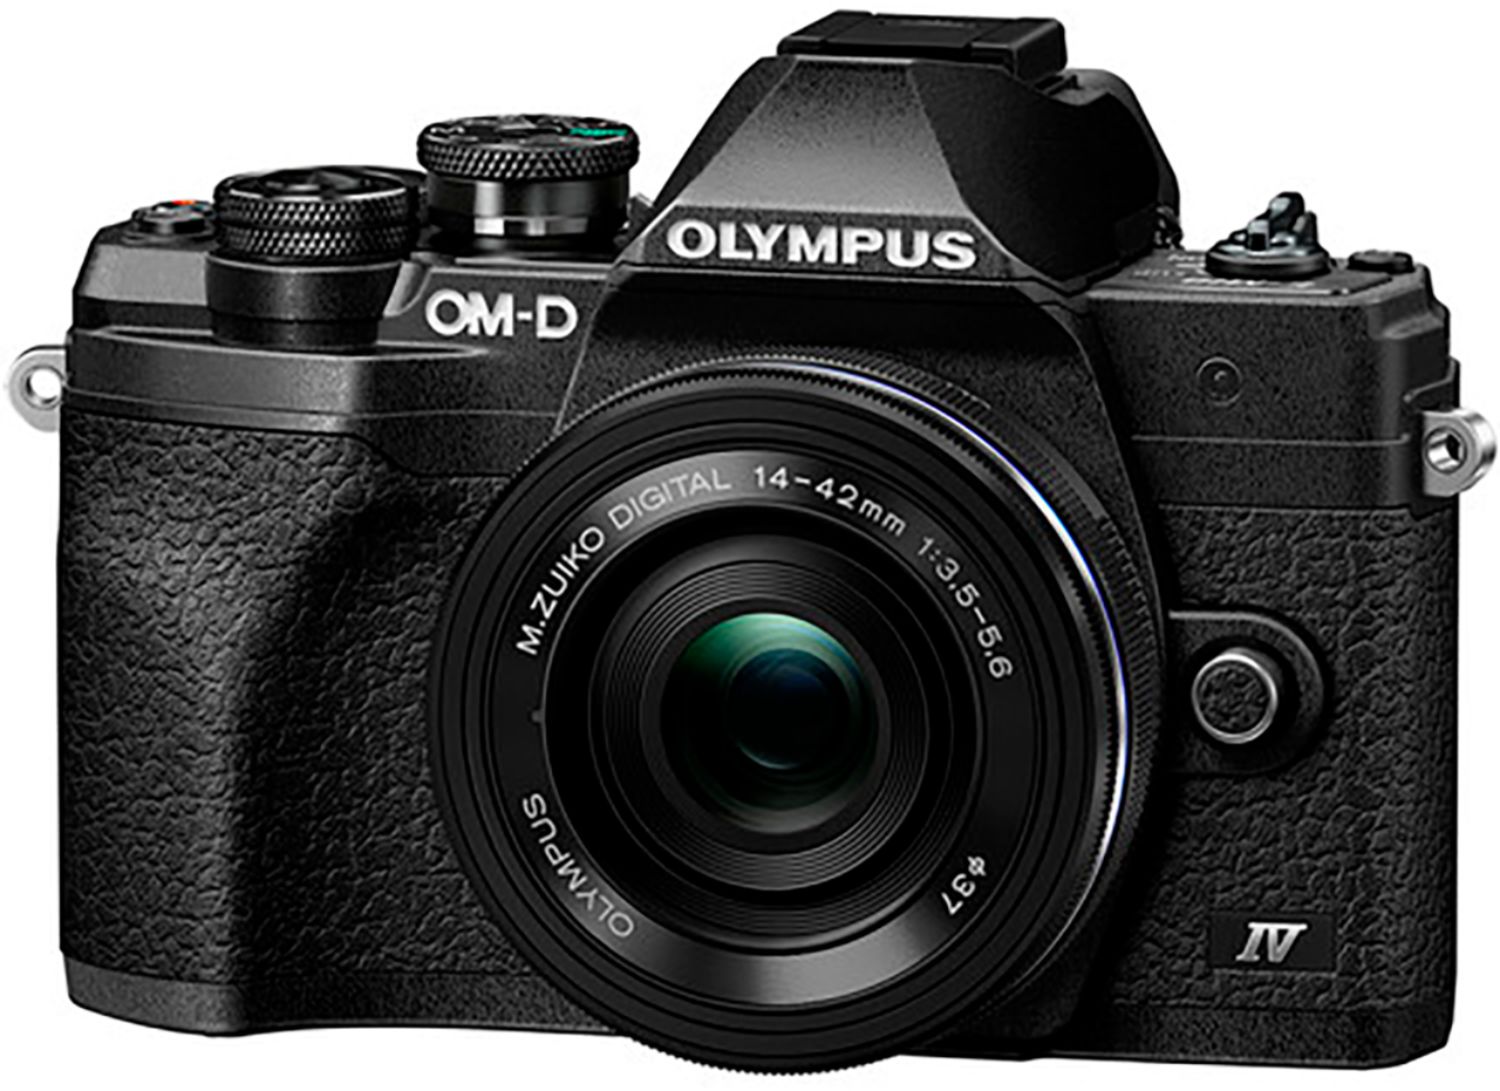 Olympus V207132SU000 OM-D E-M10 Mark IV Mirrorless Camera with 14-42mm Lens Black V207132BU000 - Best Buy